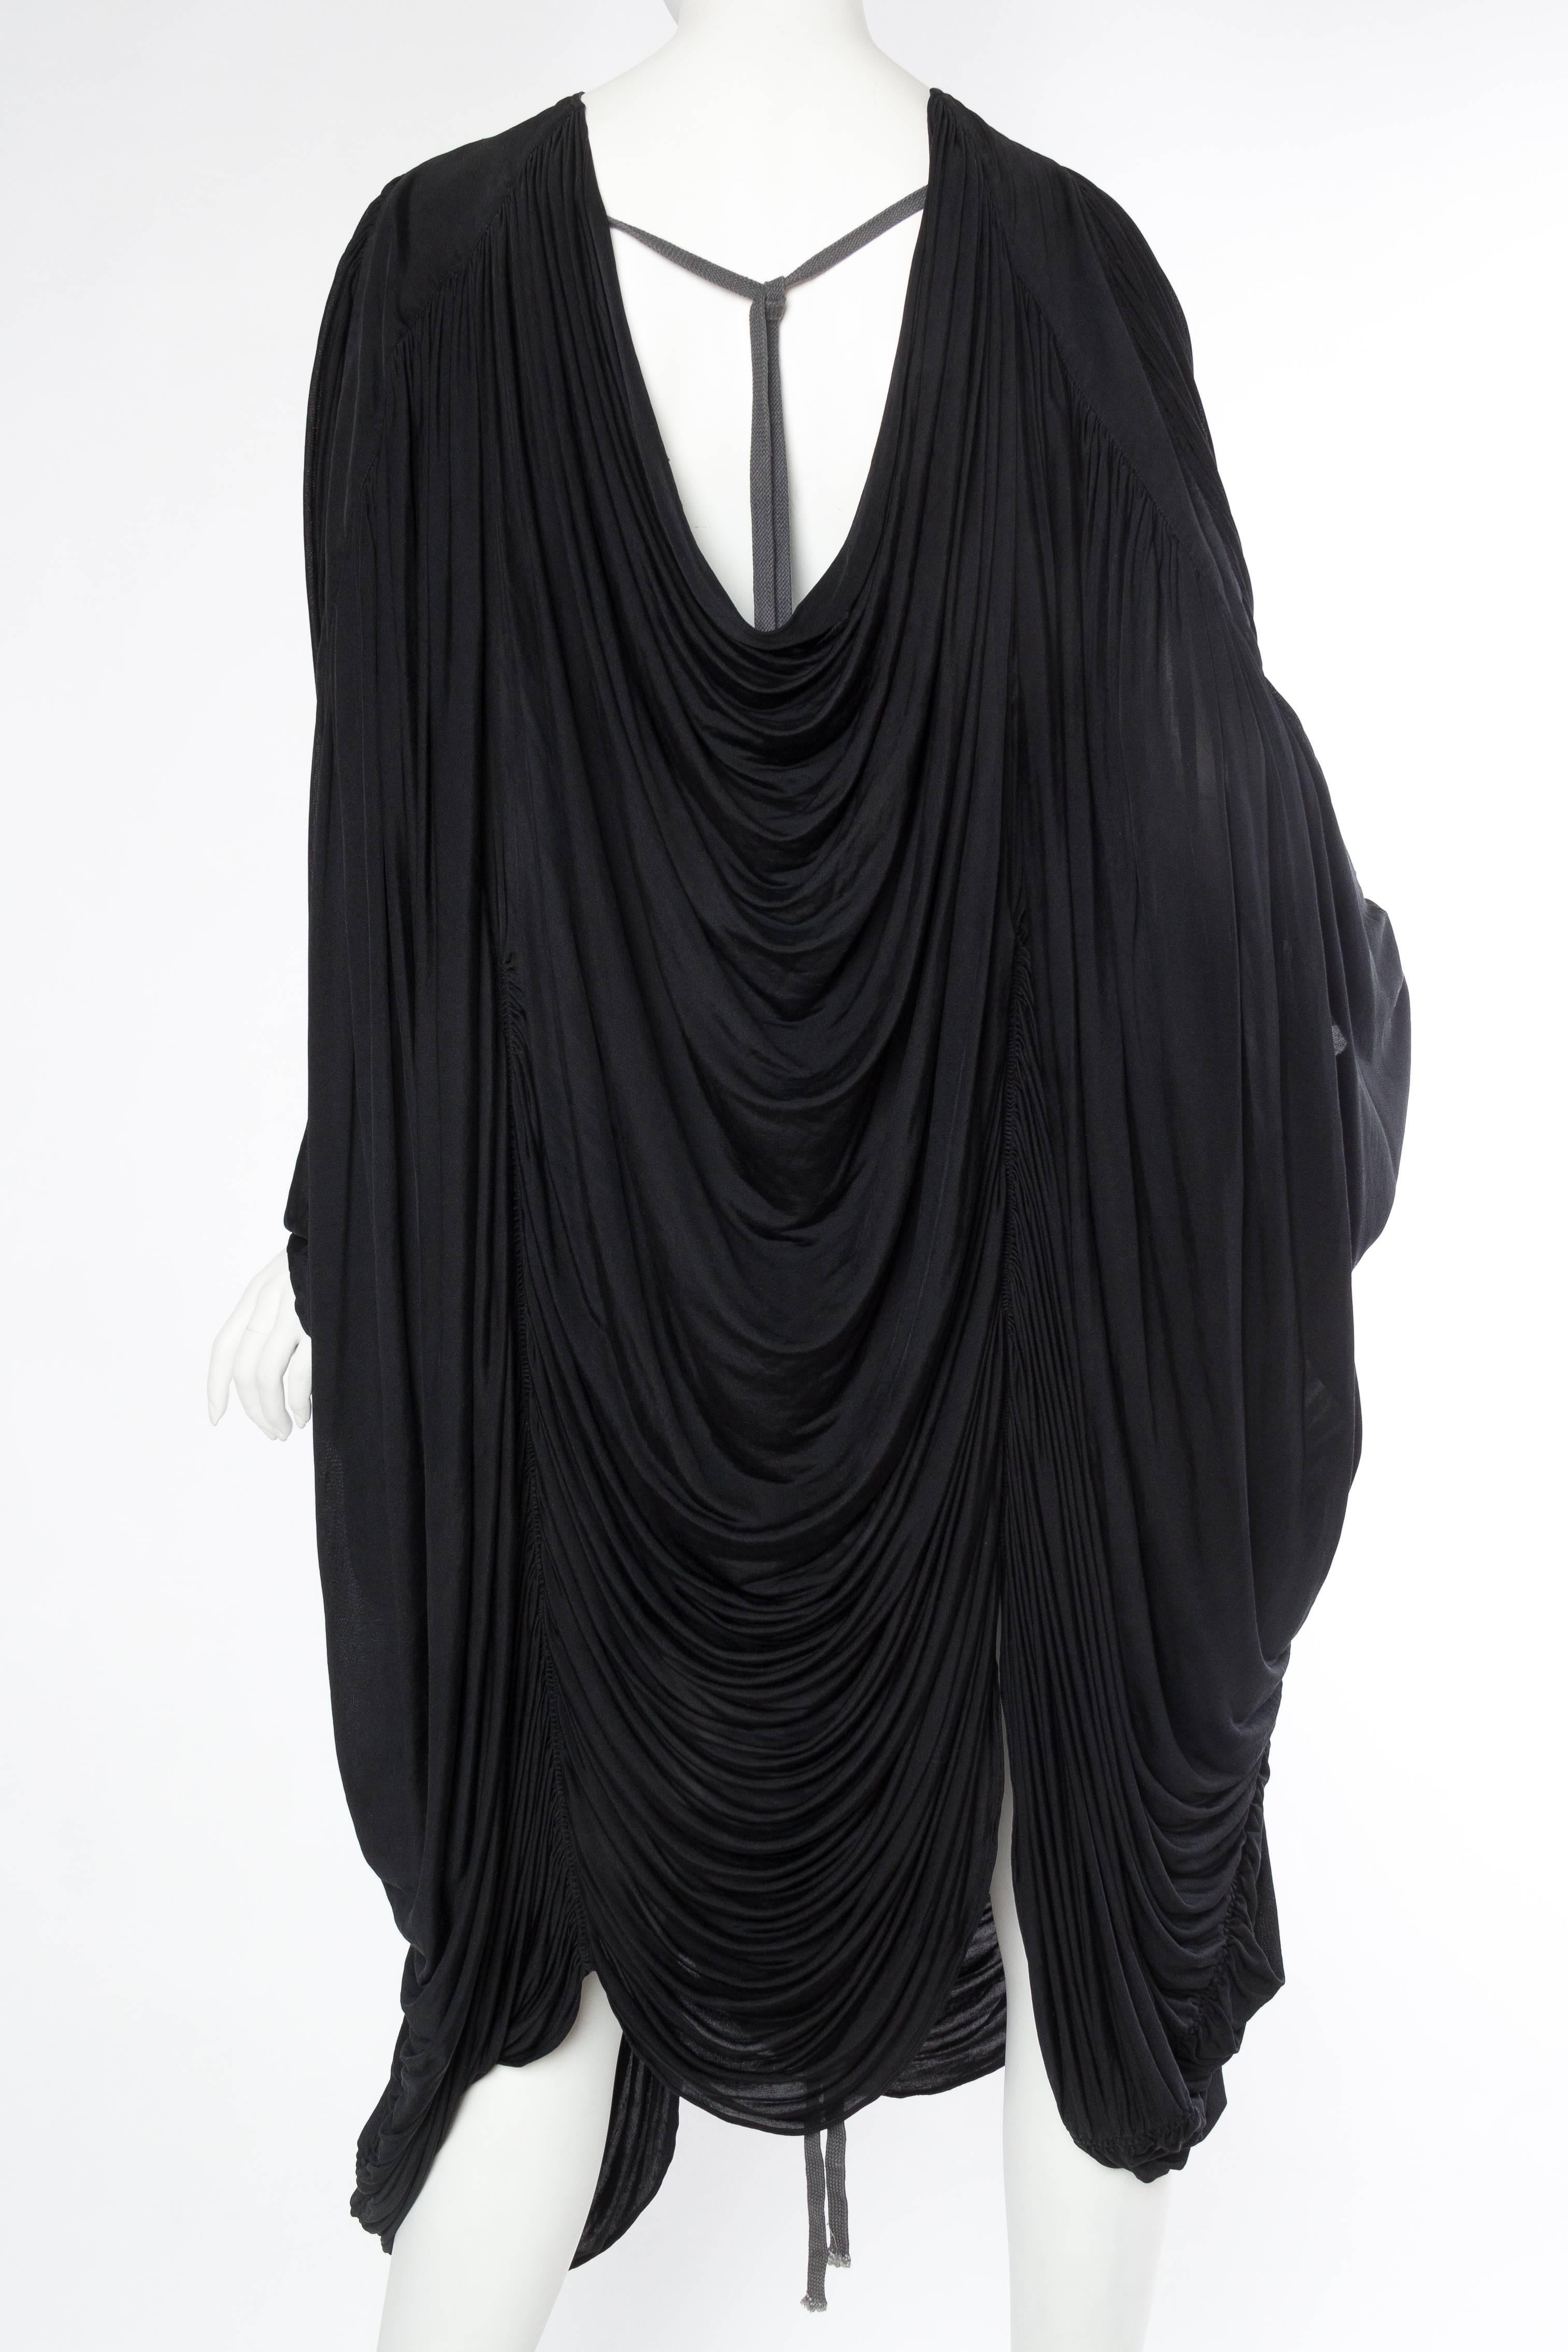 Extraordinarily Rare Very Early Issey Miyake Silk Jersey Dress 1